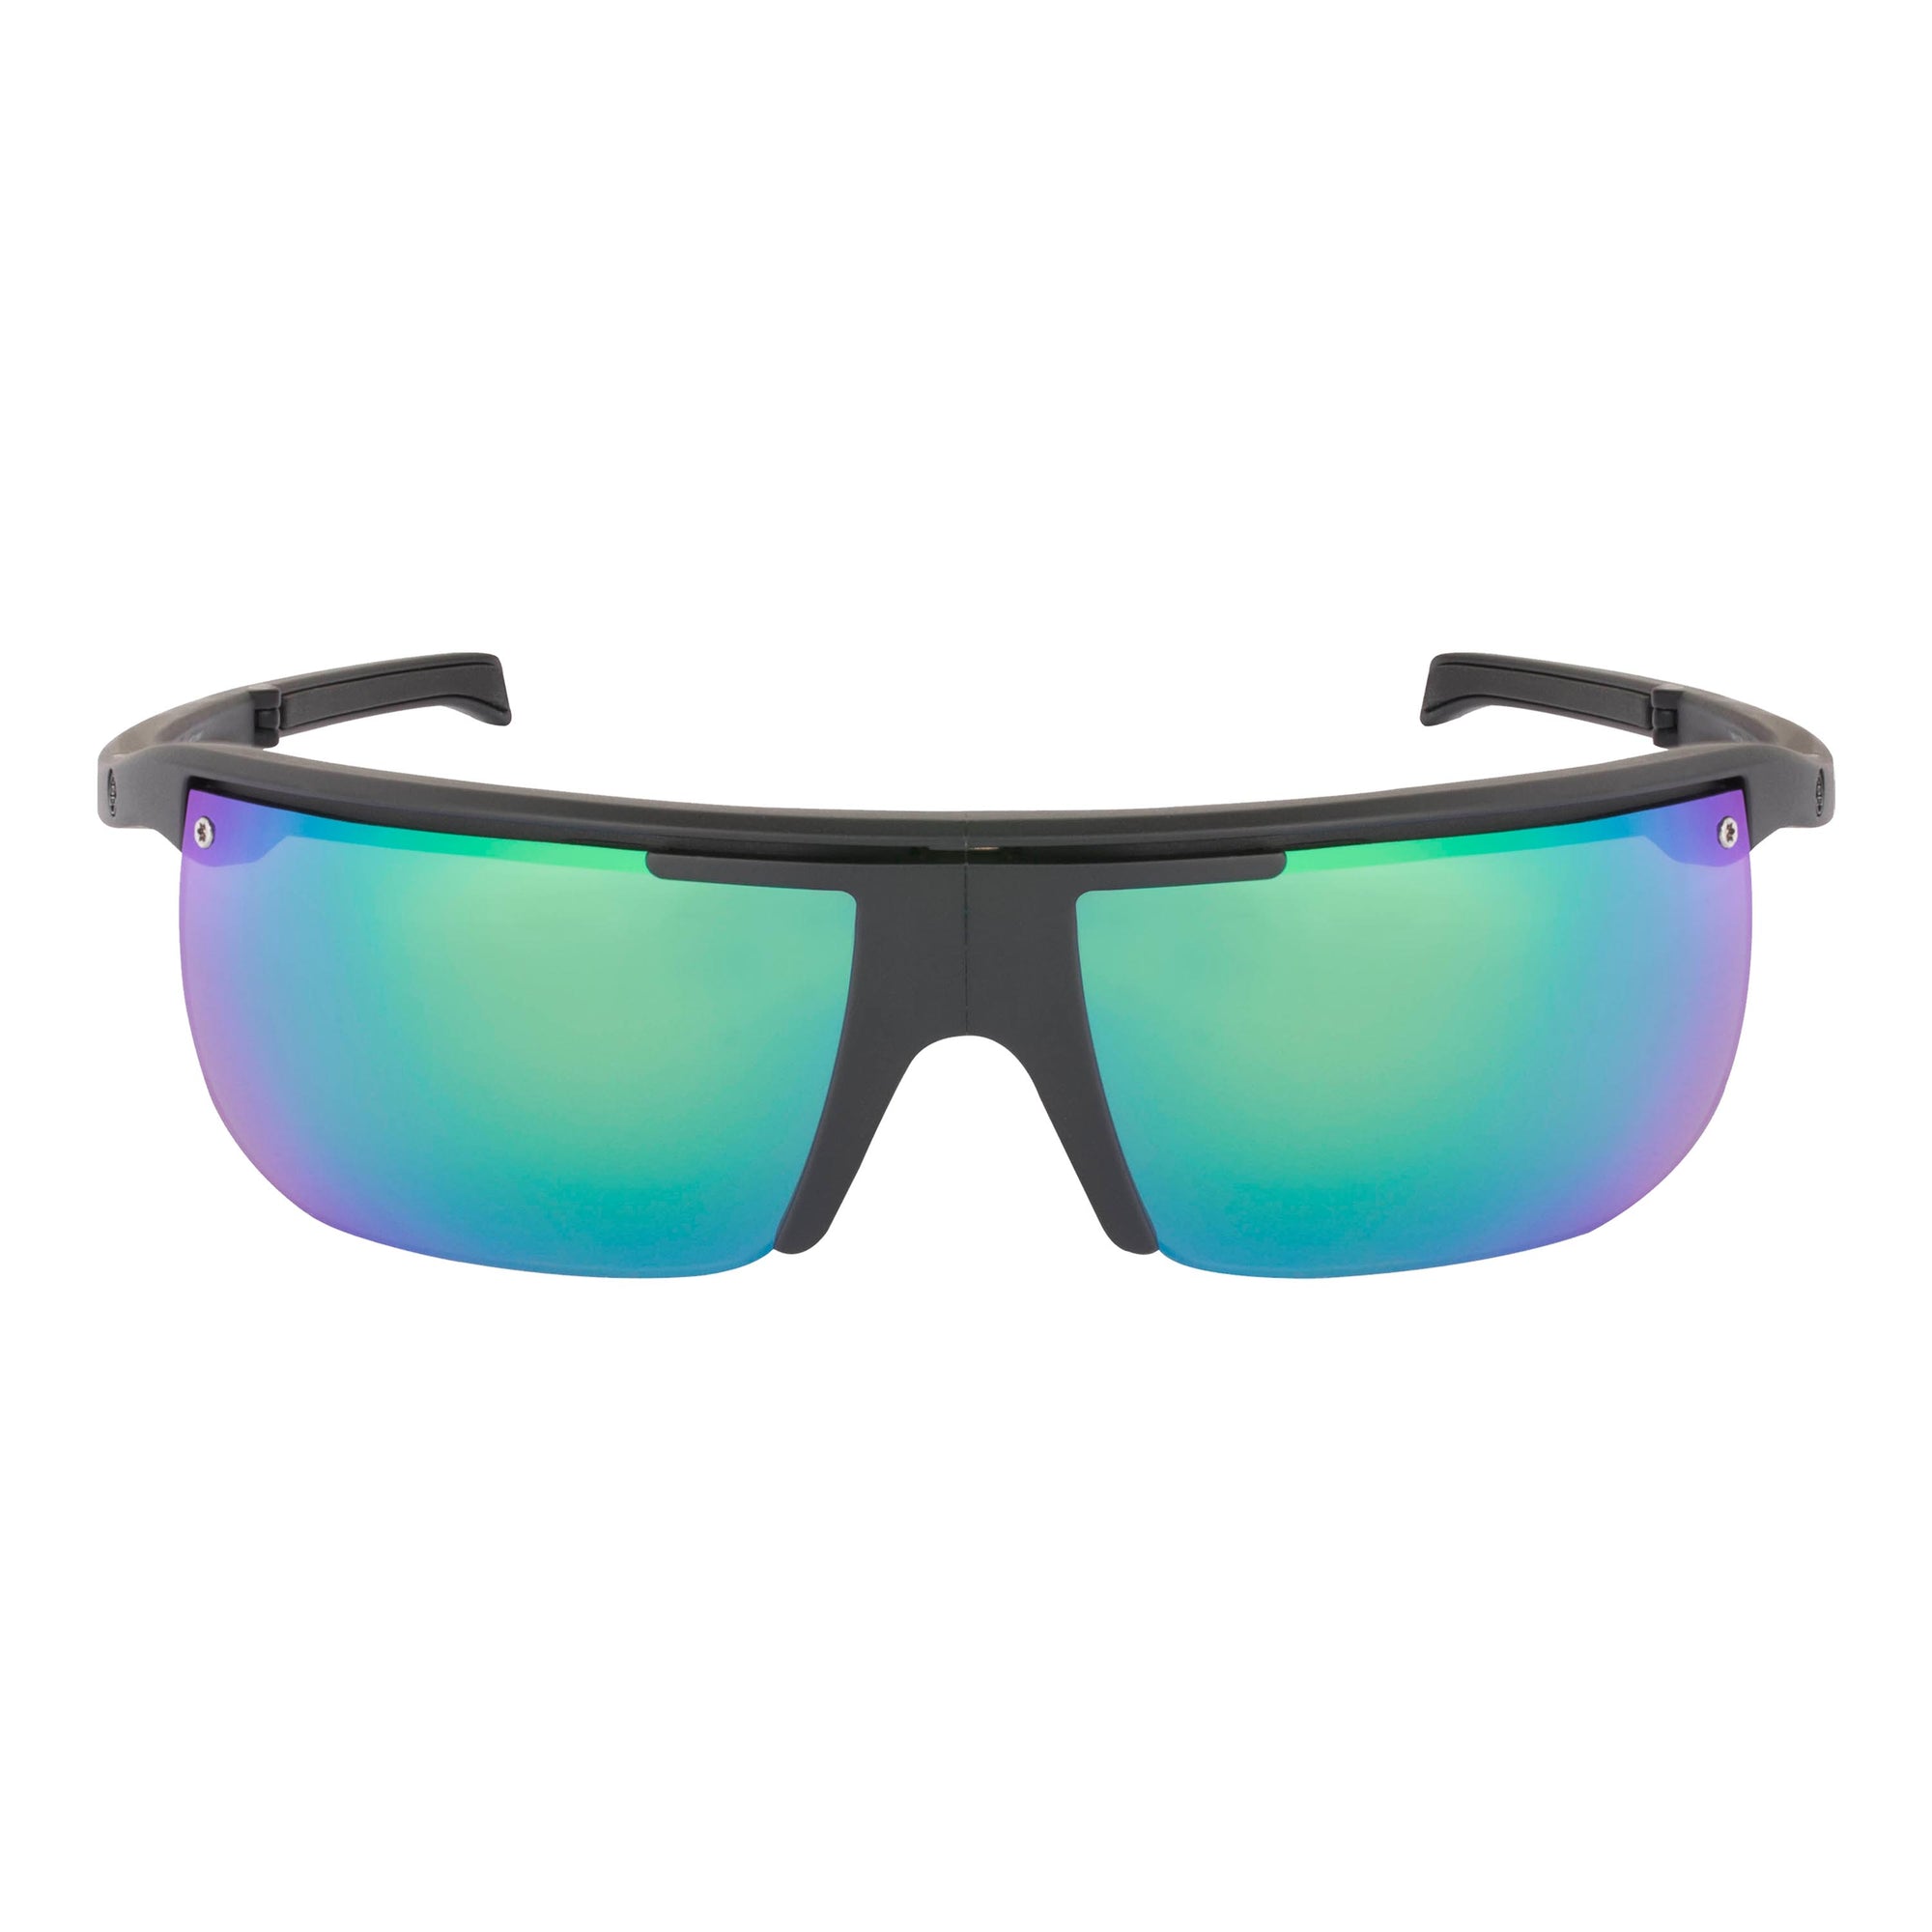 Popticals, Premium Compact Sunglasses, PopArt, 010030-BMEN, Polarized Sunglasses, Matte Black Frame, Gray Lenses with Green Mirror Finish, Glam View